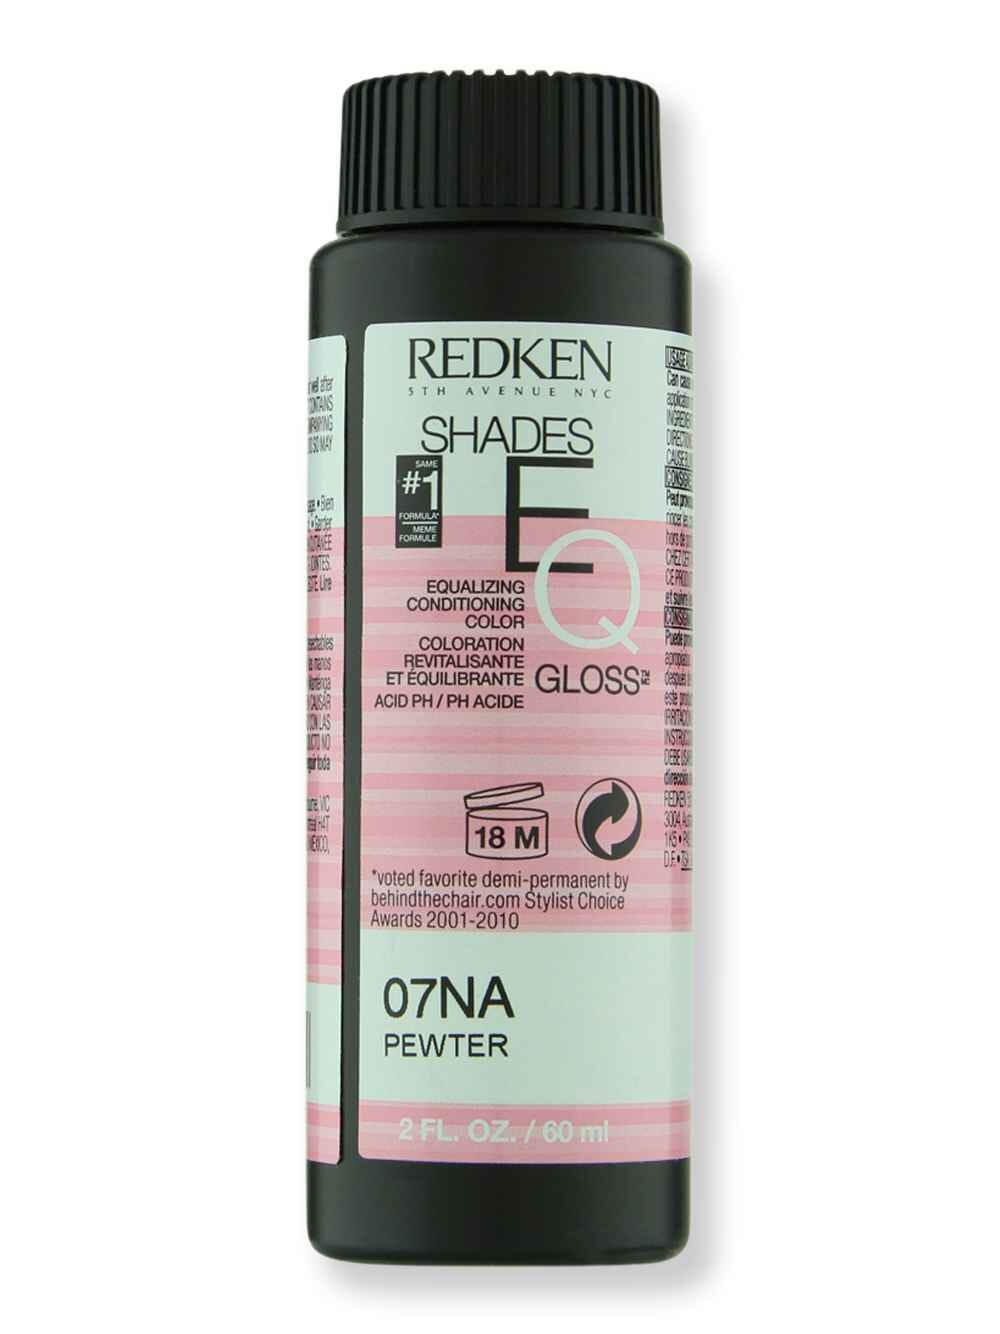 Redken Redken Shades EQ Gloss 2 oz60 ml07NA Pewter Hair Color 